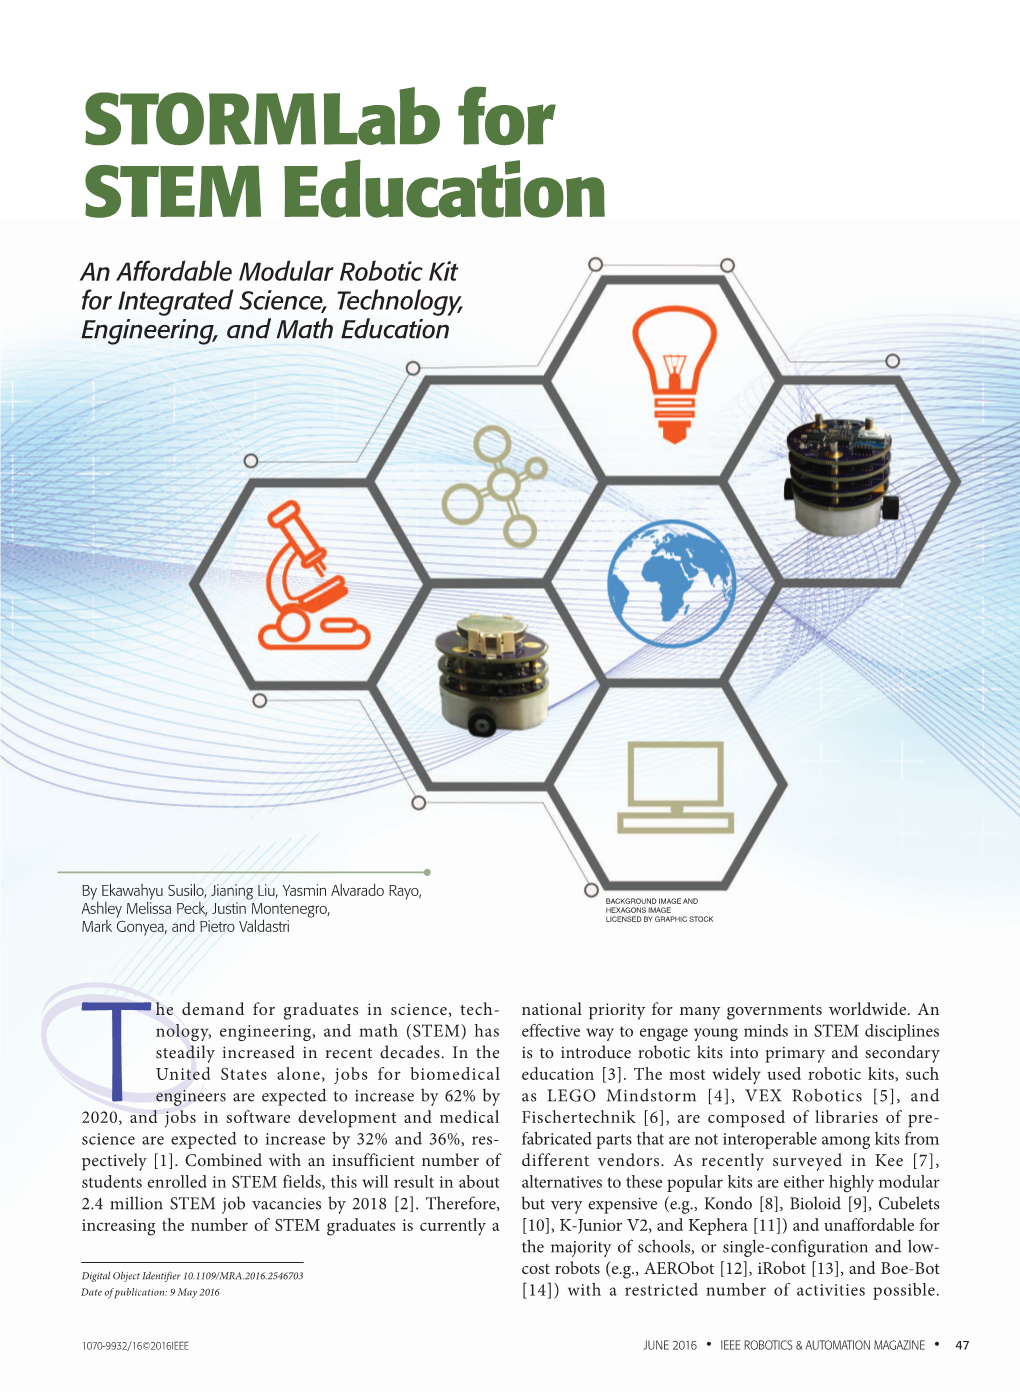 Stormlab for STEM Education